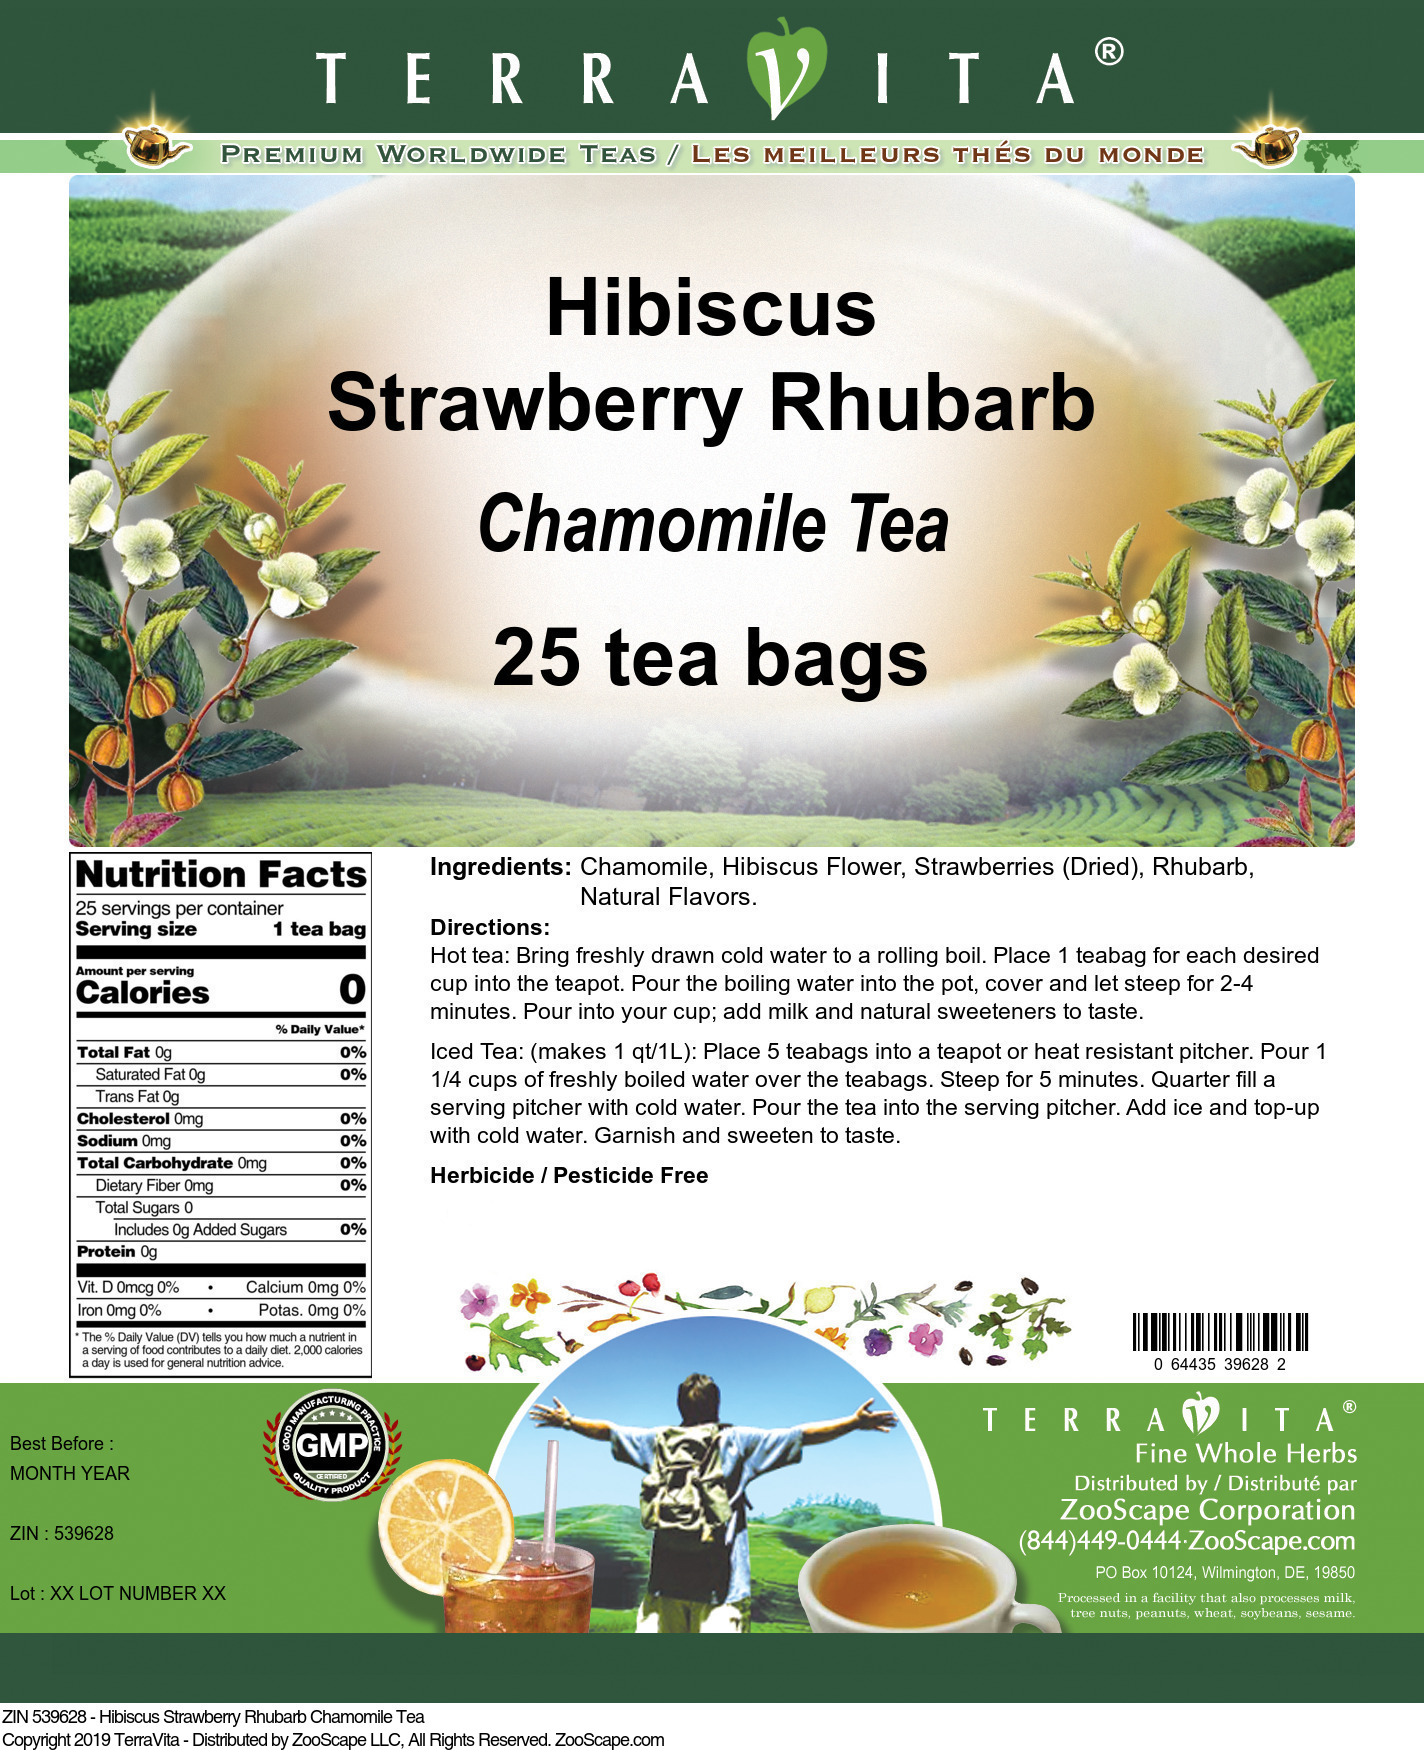 Hibiscus Strawberry Rhubarb Chamomile Tea - Label